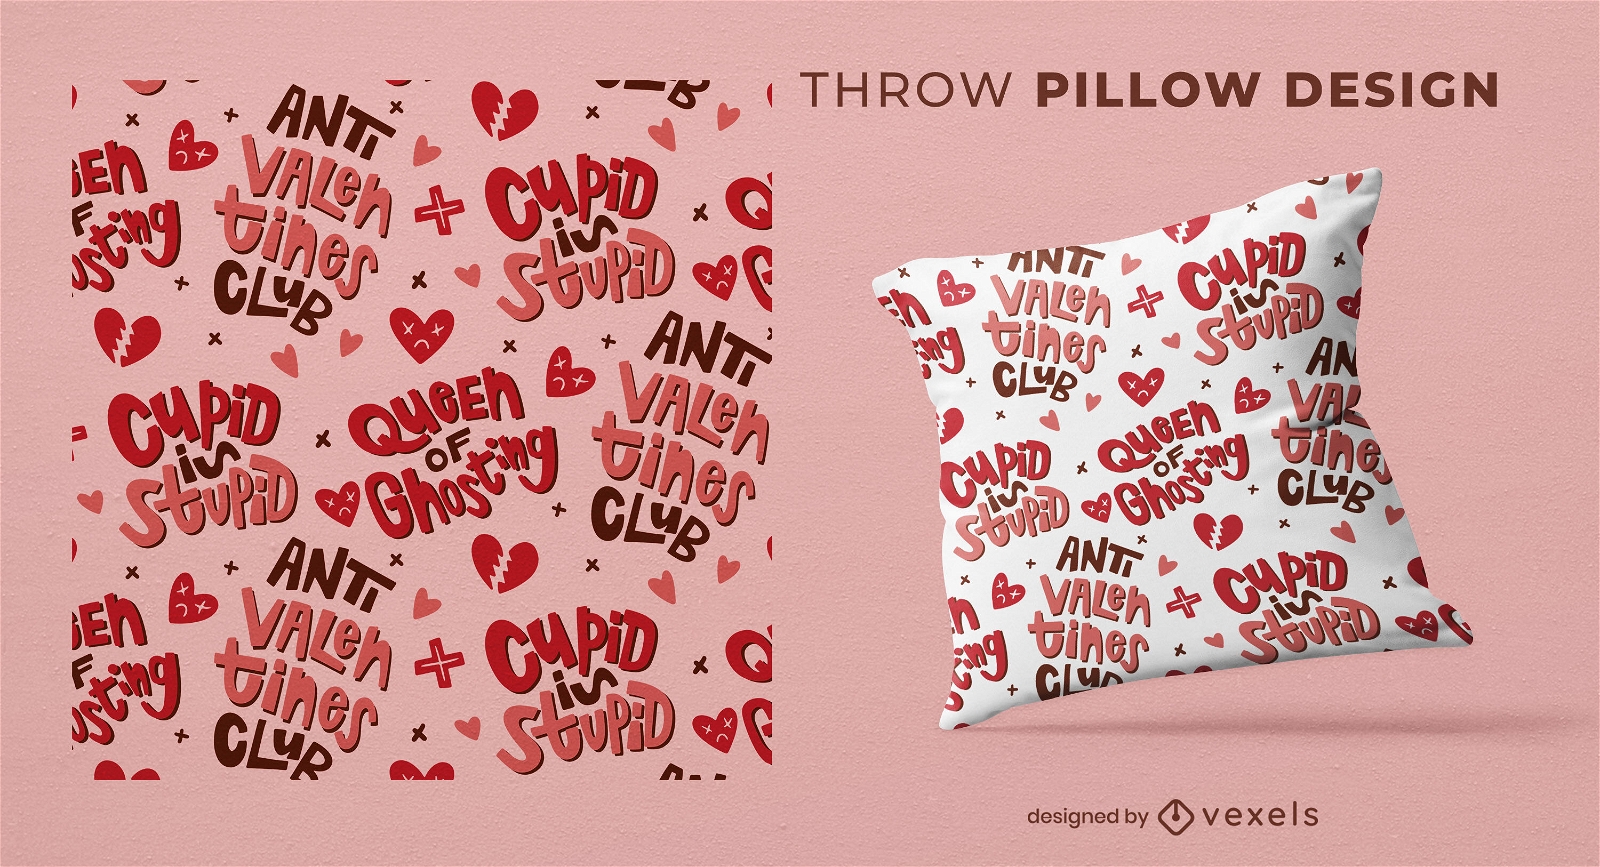 Diseño de almohada anti San Valentín.